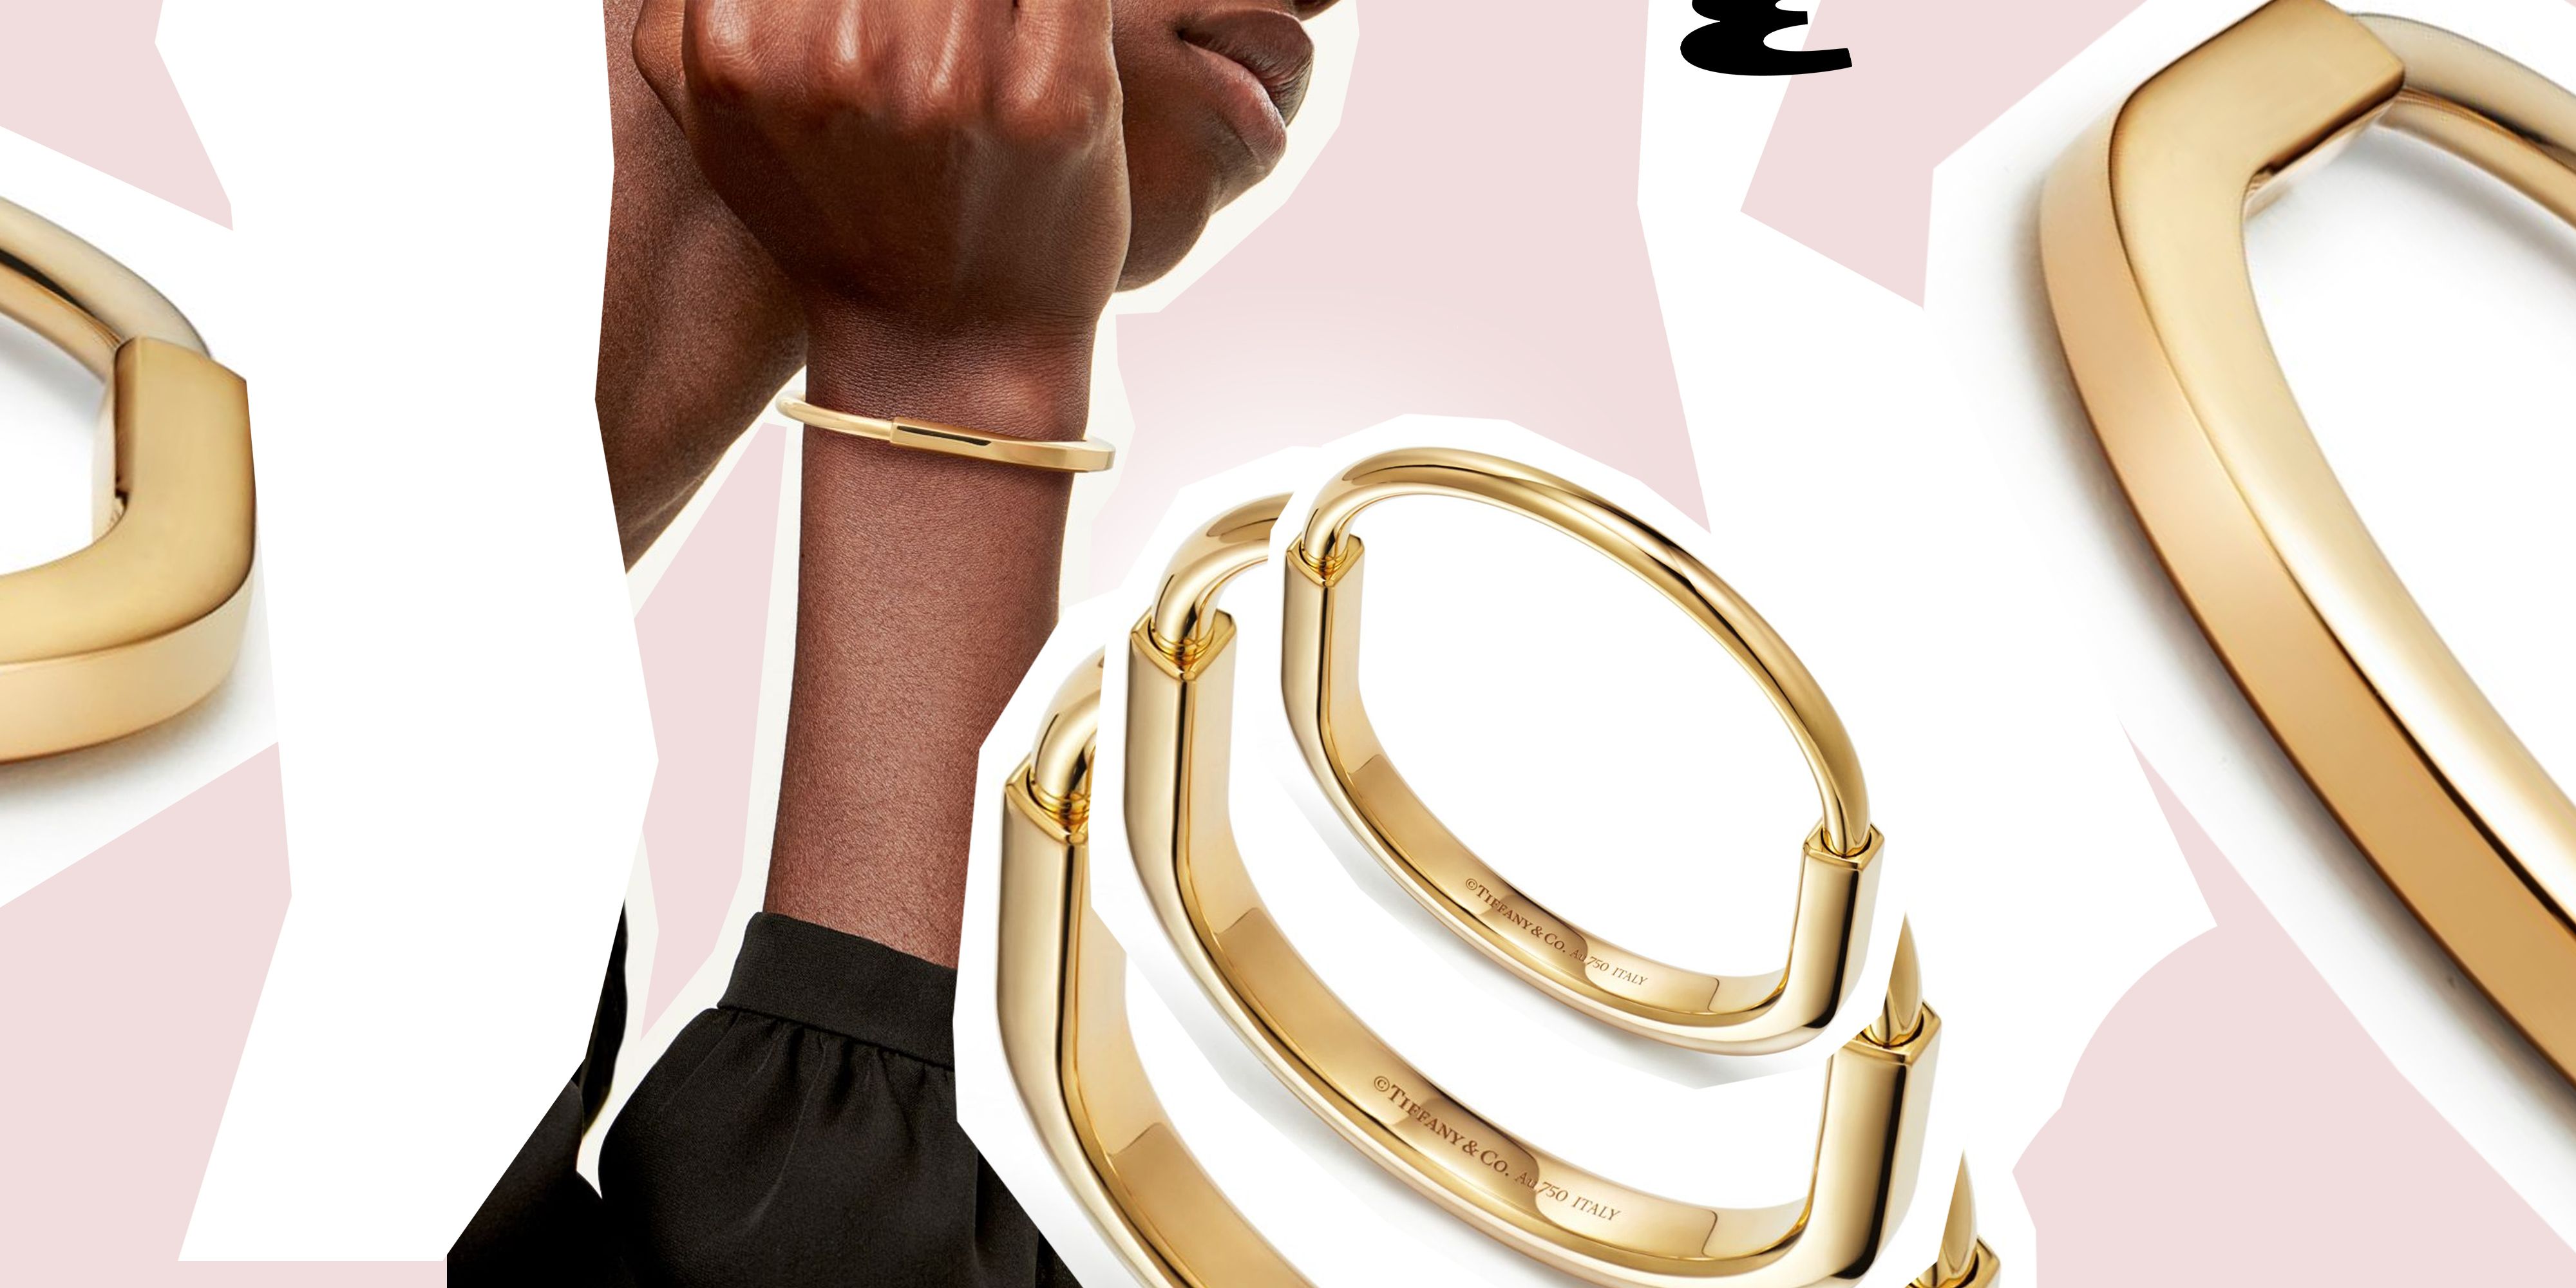 Buy Silver Bracelets & Bangles for Women by Vendsy Online | Ajio.com